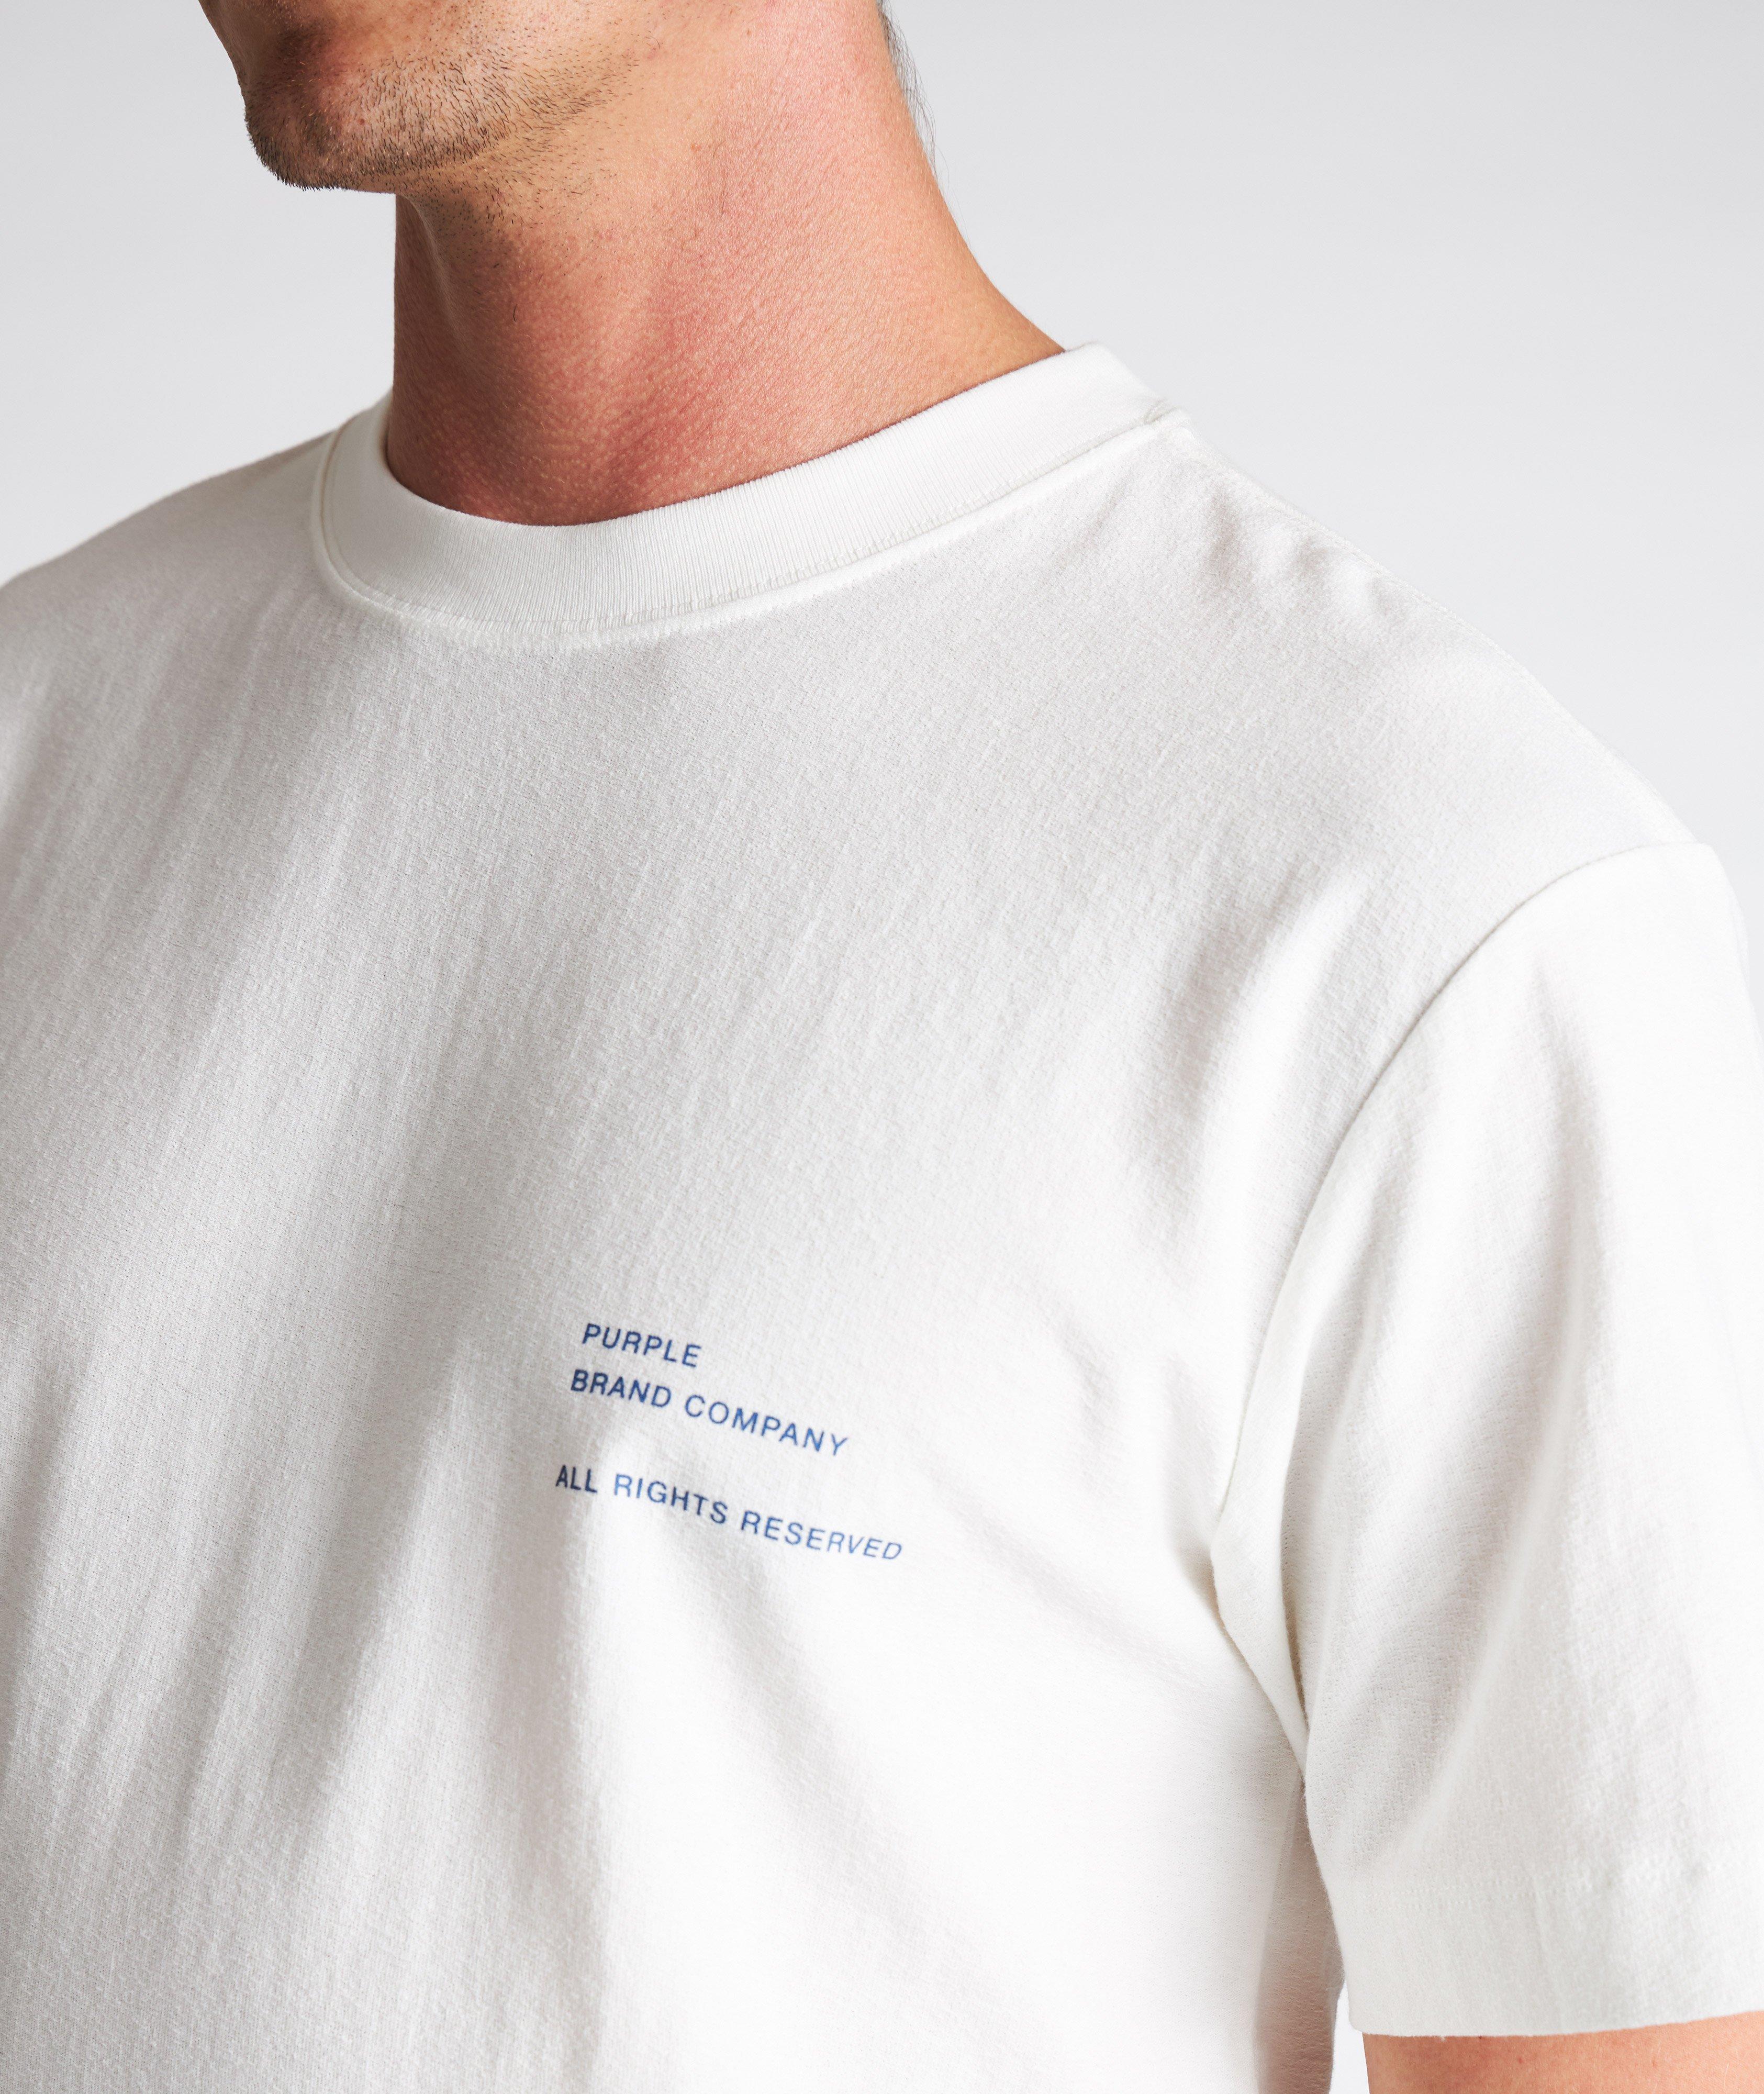 P104 Terry Company Print T-Shirt image 4